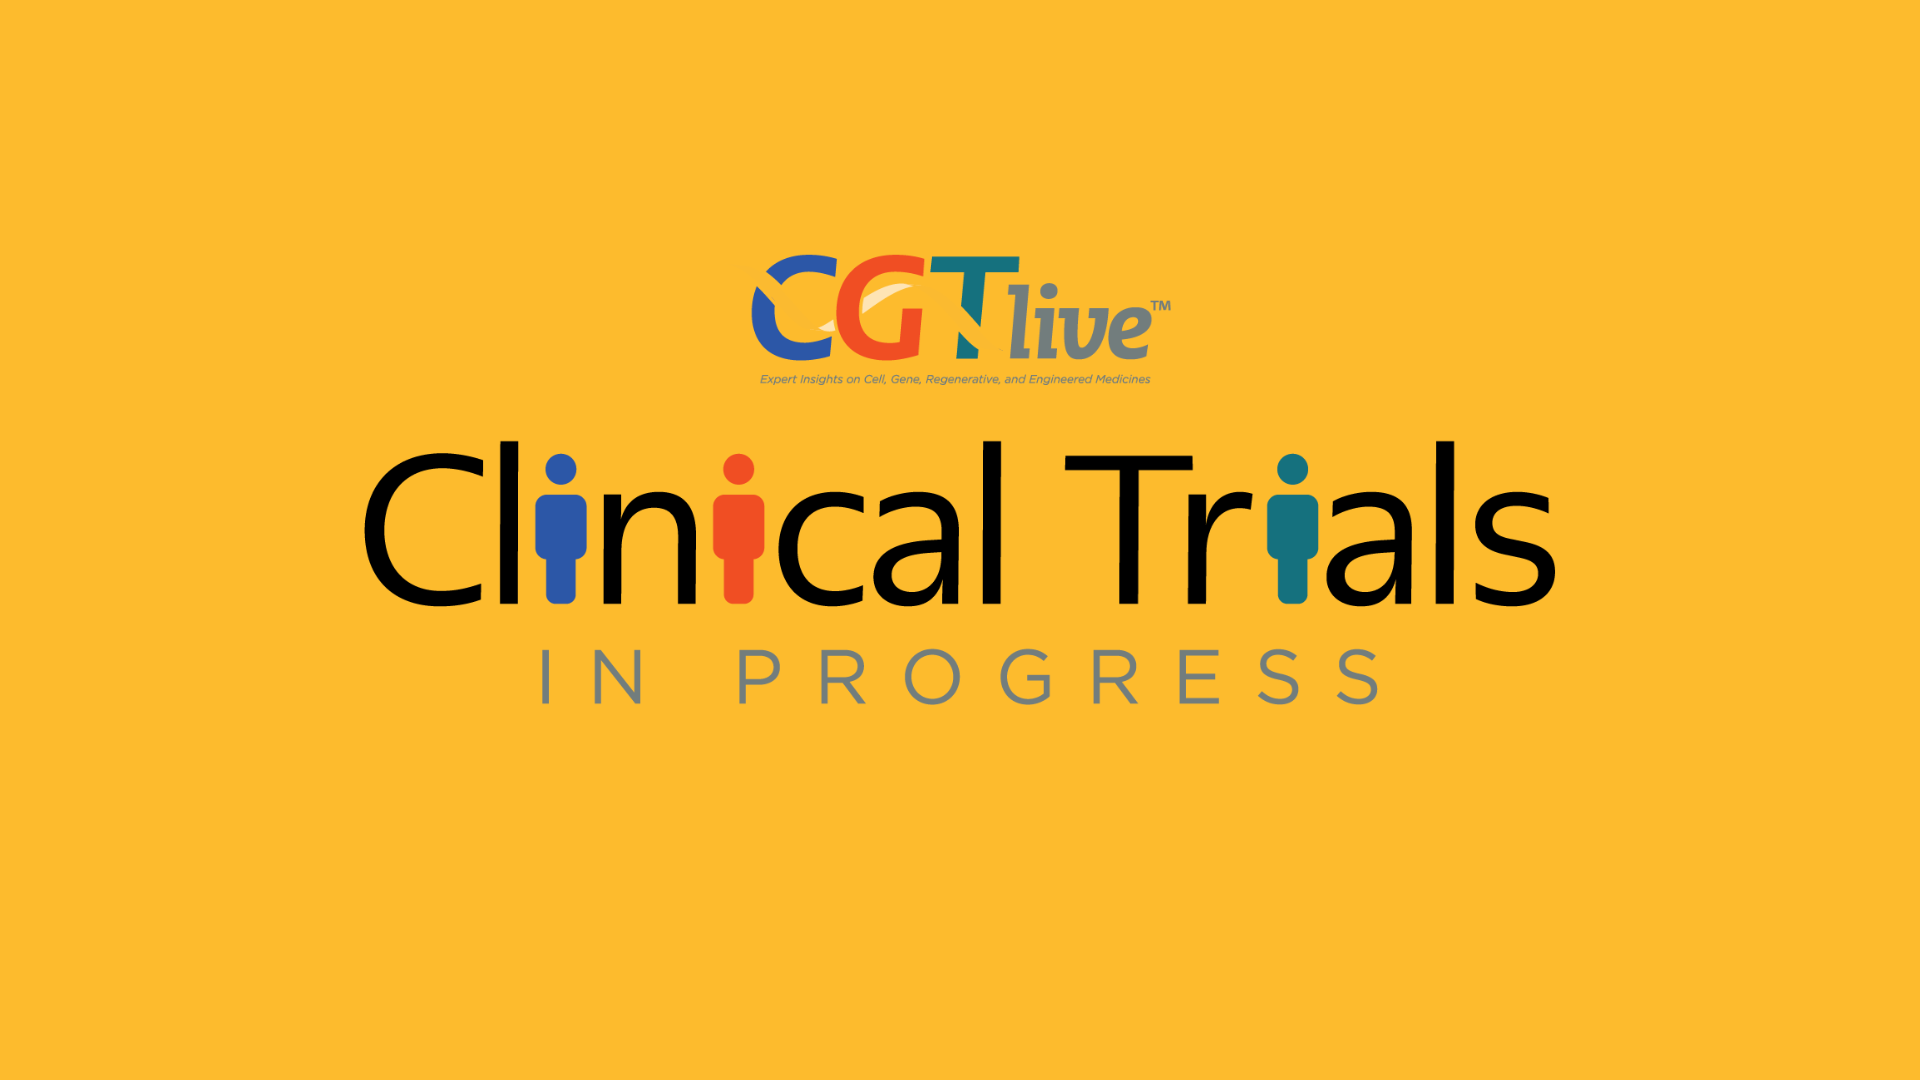 Neurogene’s Clinical Trial Seeks to Assess CLN5 Batten Disease Gene Therapy NGN-101